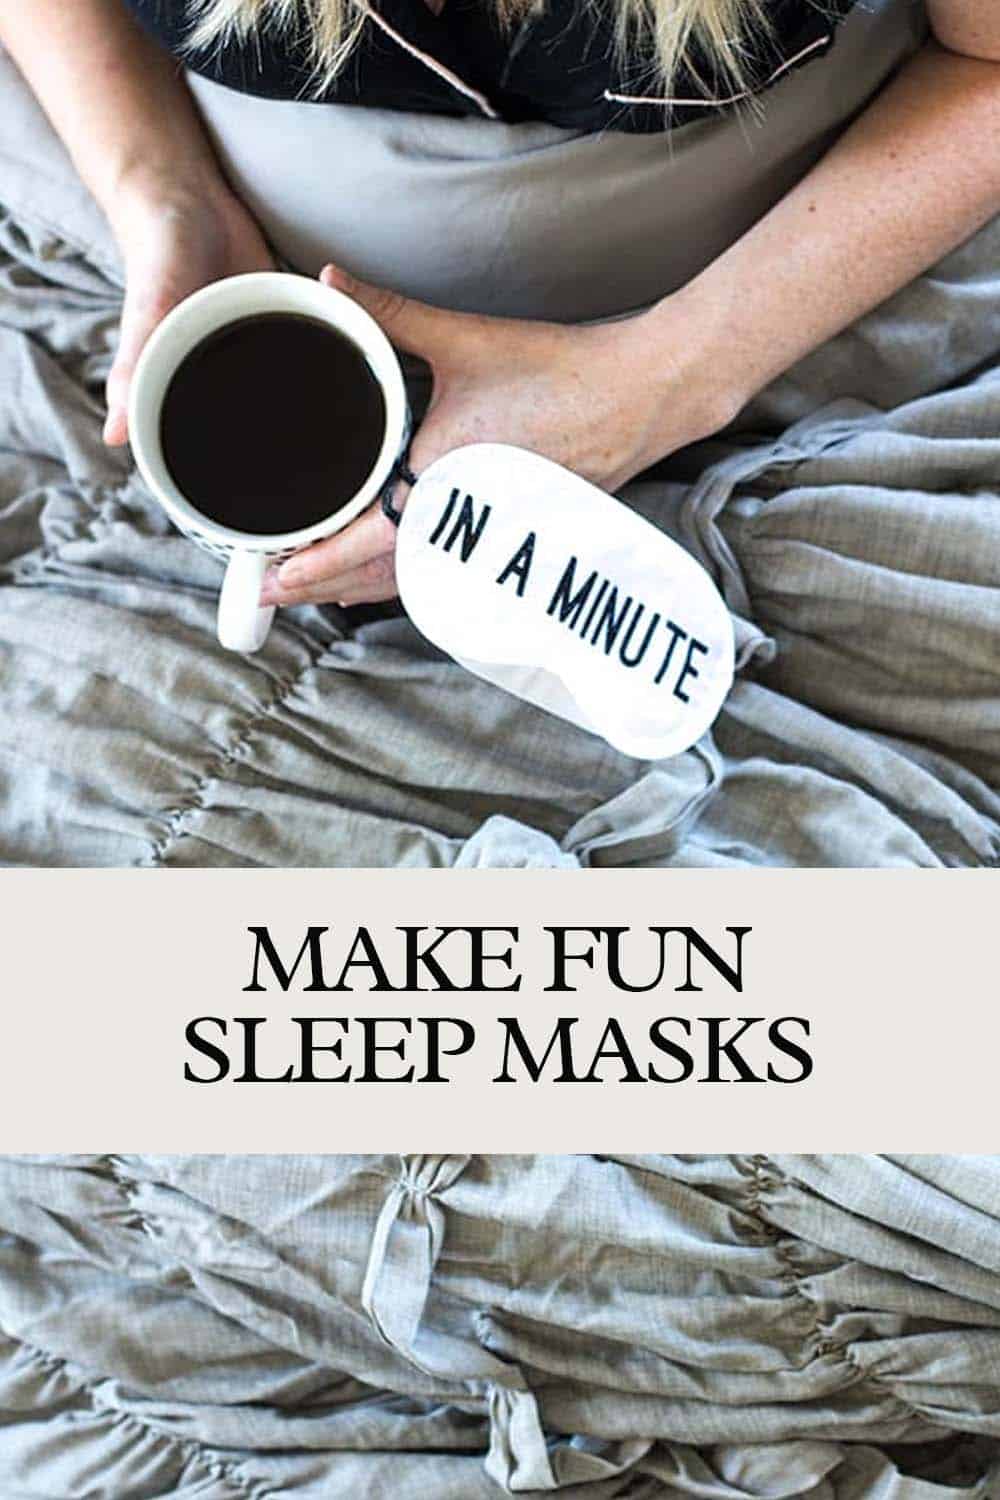 Diy Sleep Masks With Fun Sayings Thoughtfully Simple 8161